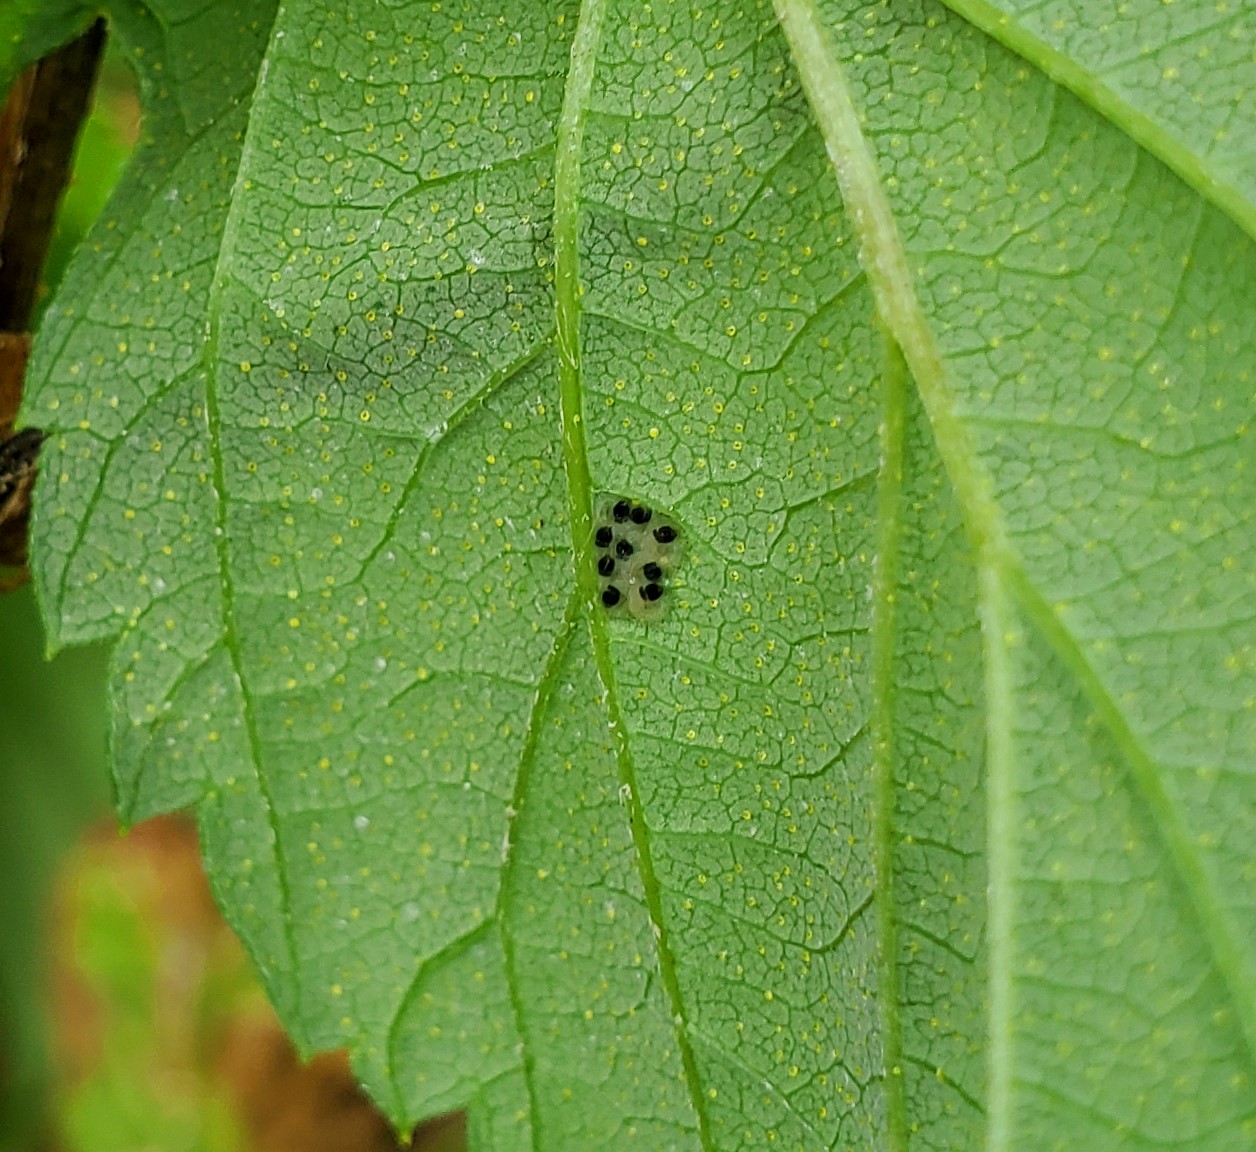 Little black eggs on a leaf.